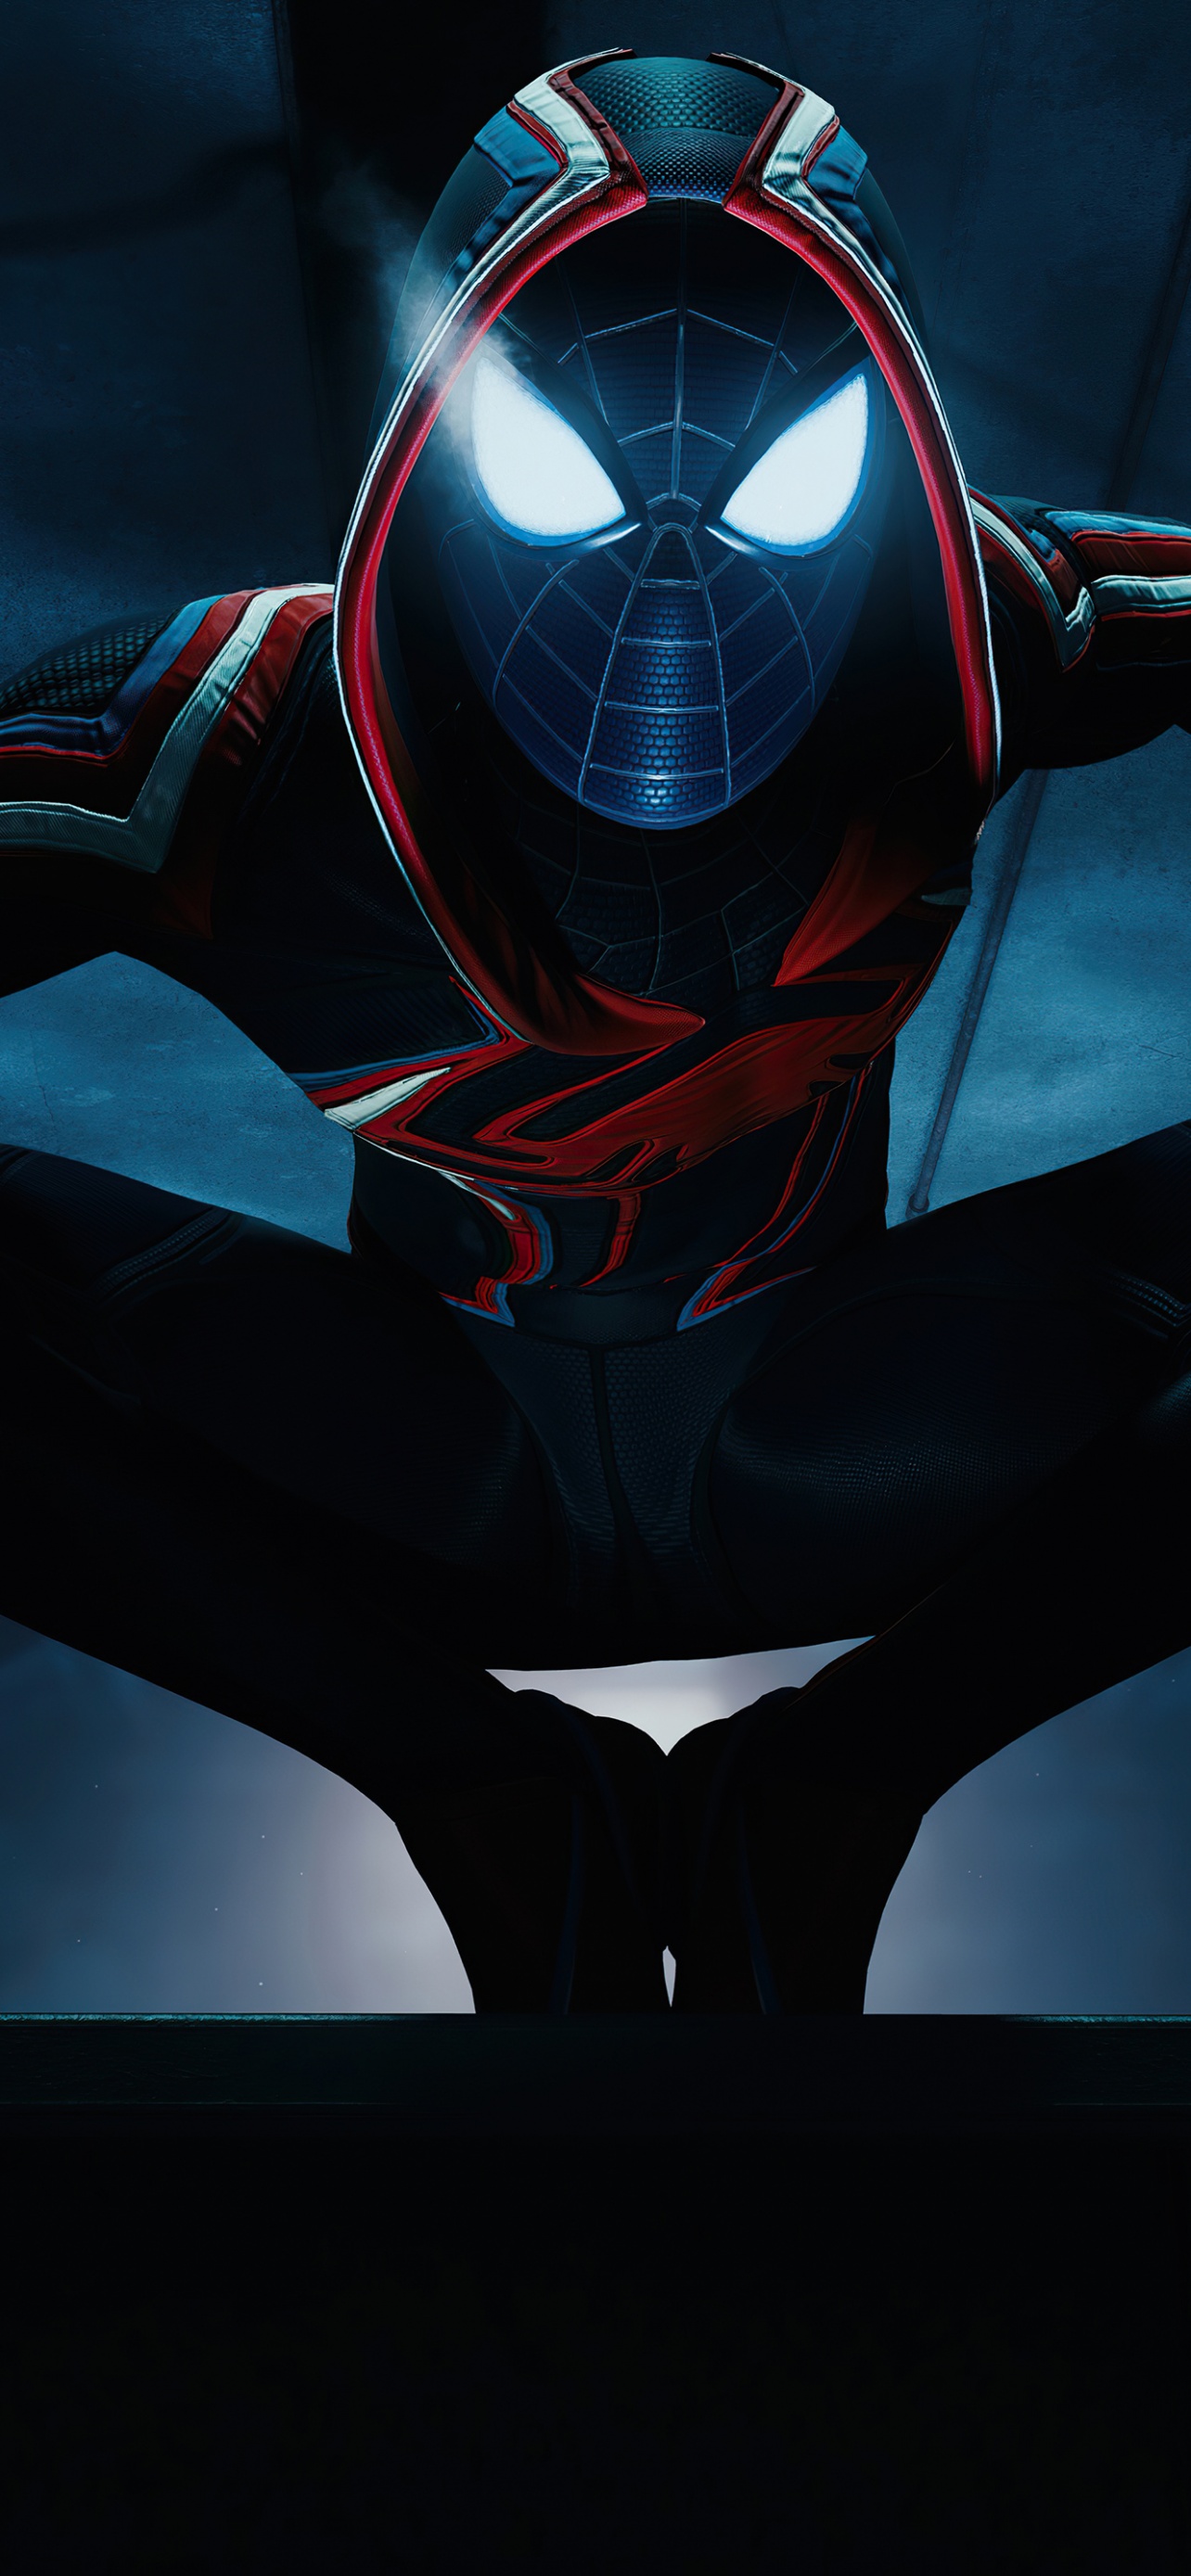 Marvel's Spider Man: Miles Morales Wallpaper 4K, Photo Mode, Games